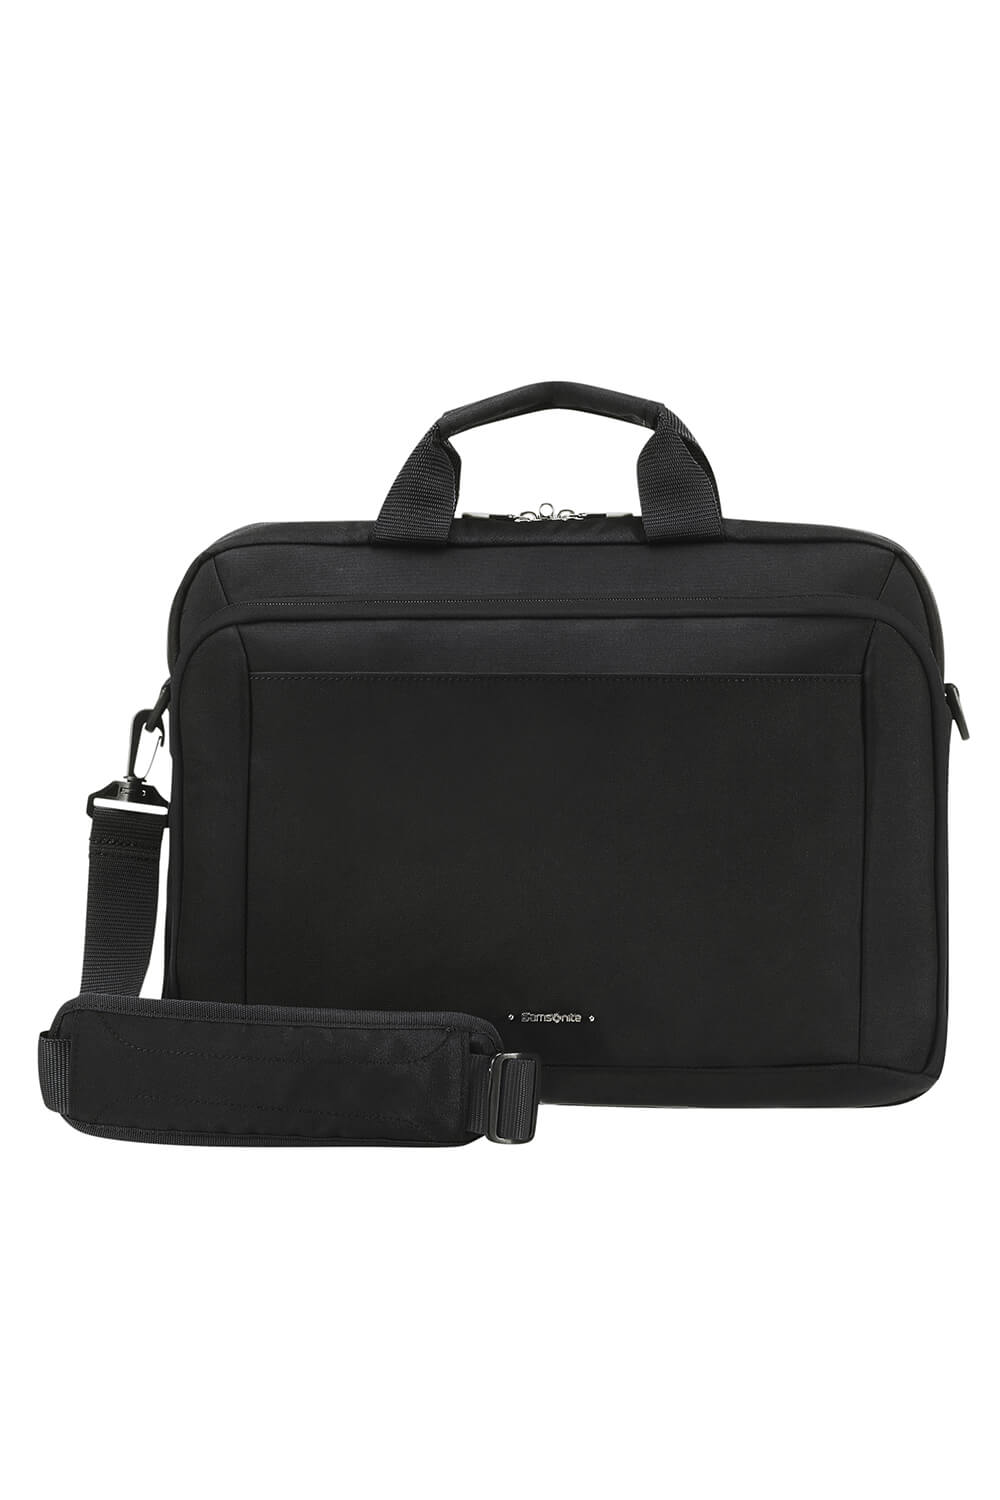 Samsonite Τσάντα Laptop 15.6'' GUARDIT CLASSY ΜΑΥΡΟ Size 30